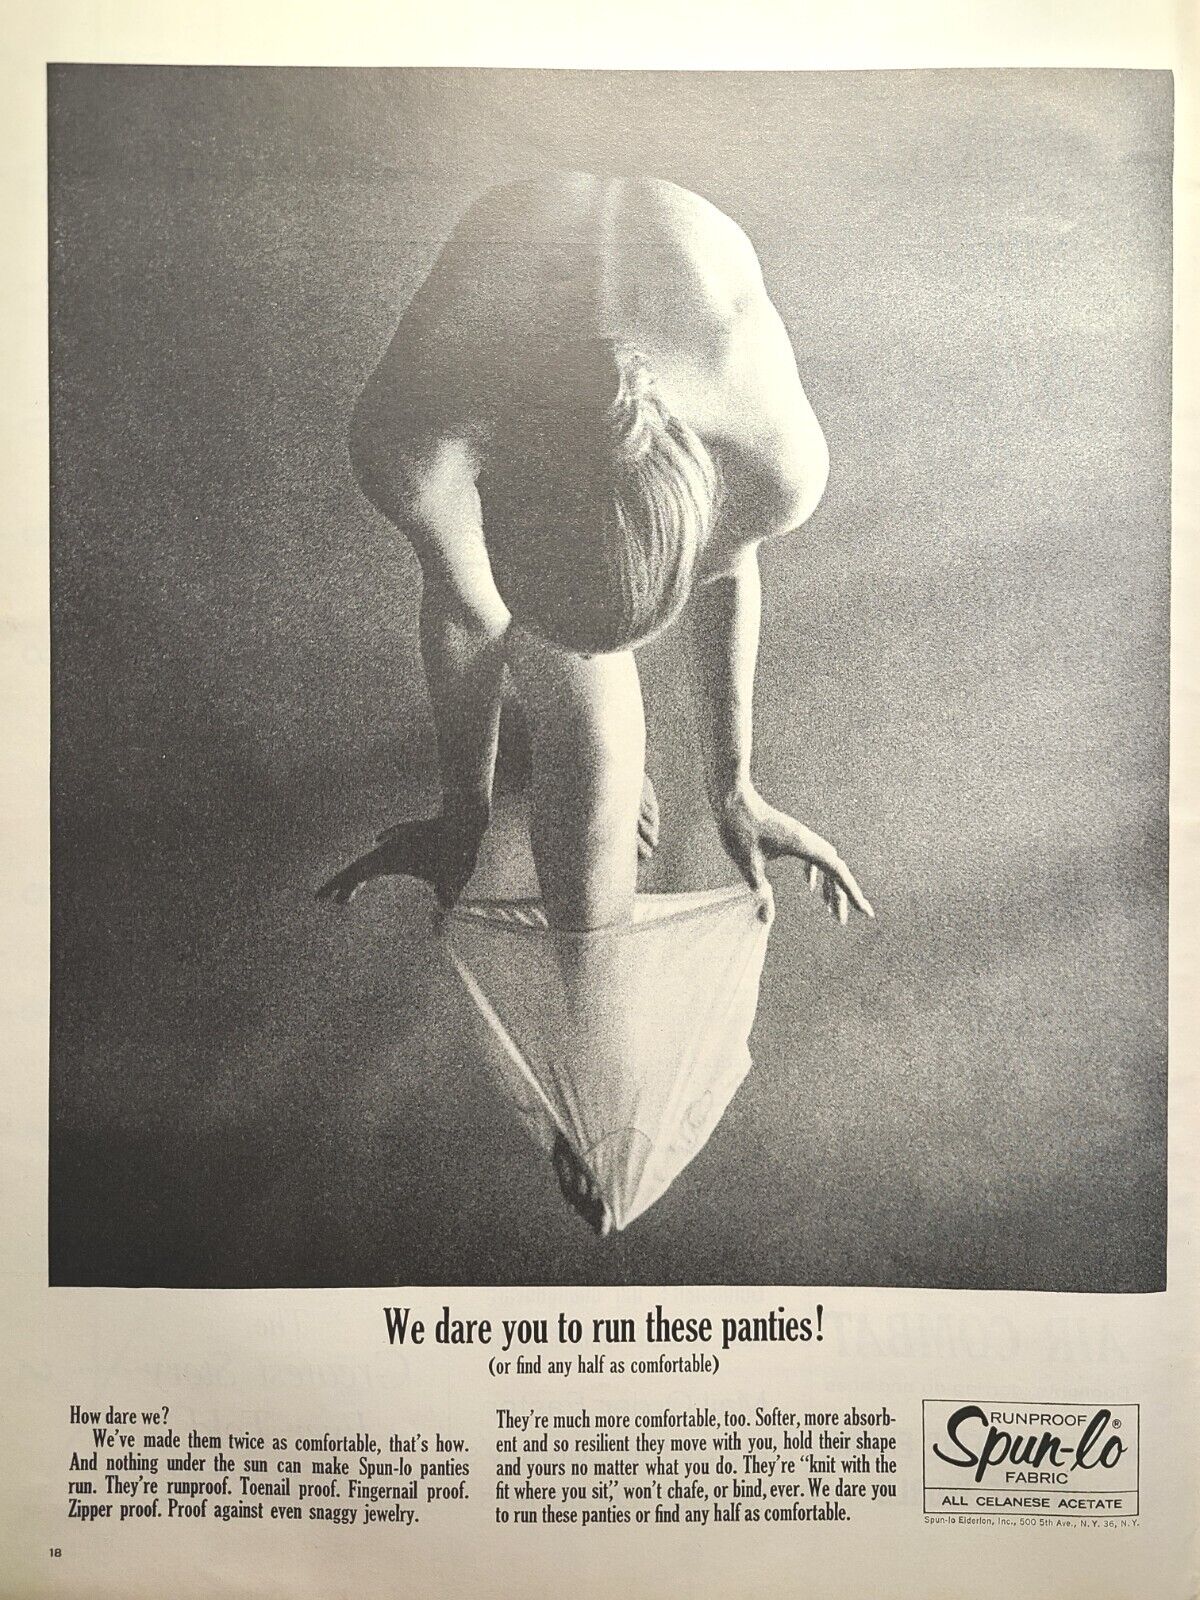 Run Proof Spun-lo Fabric Panties Celanese Acetate Cloth Vintage Print Ad 1964